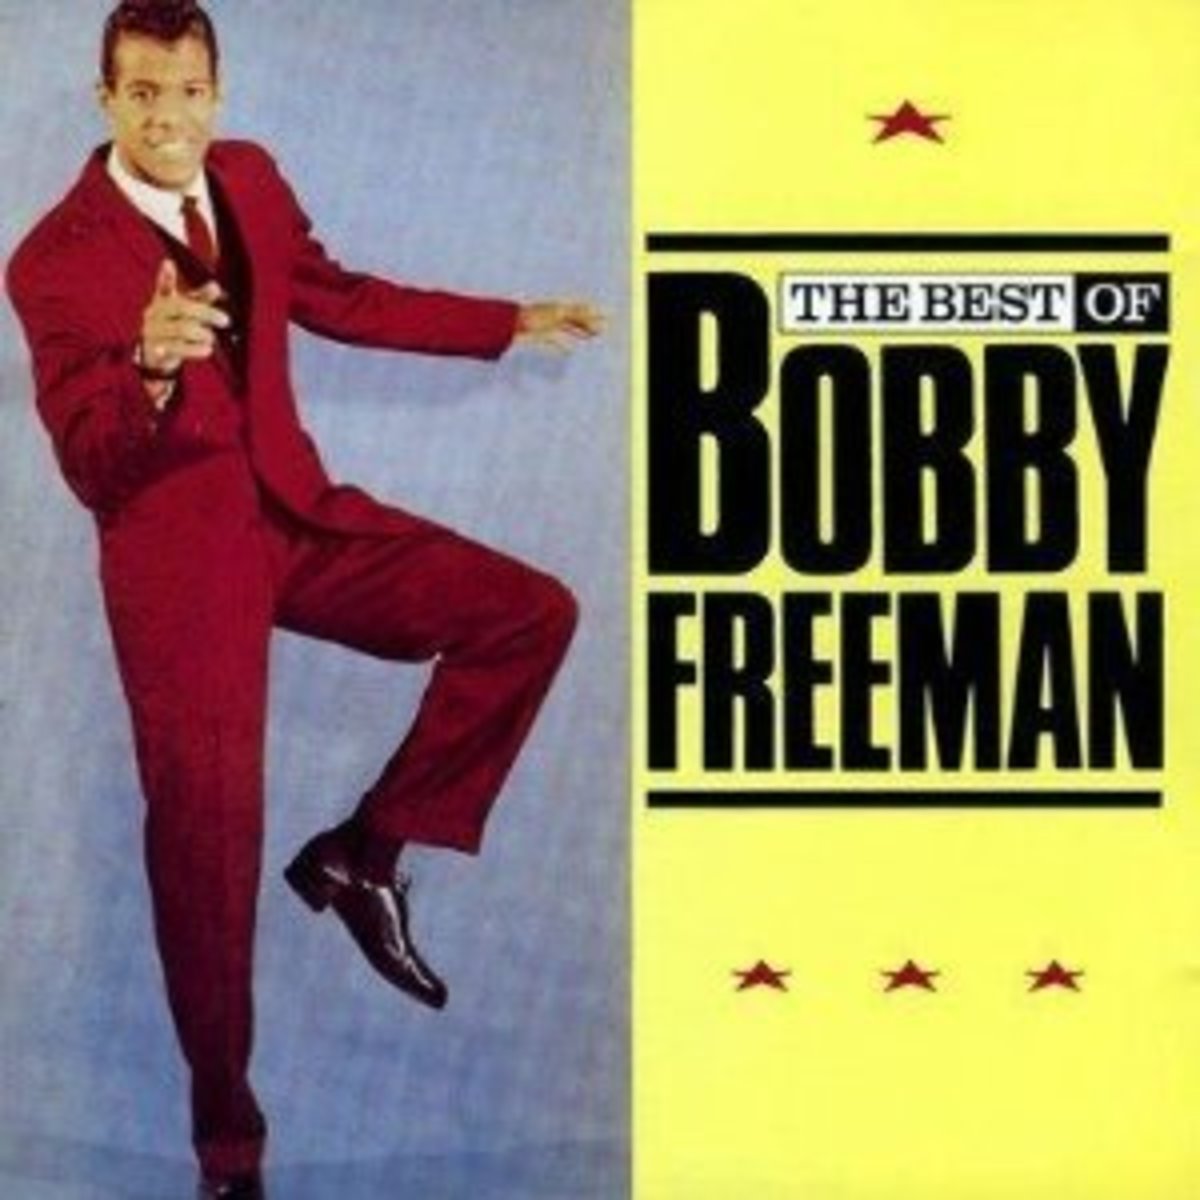 Bobby Freeman